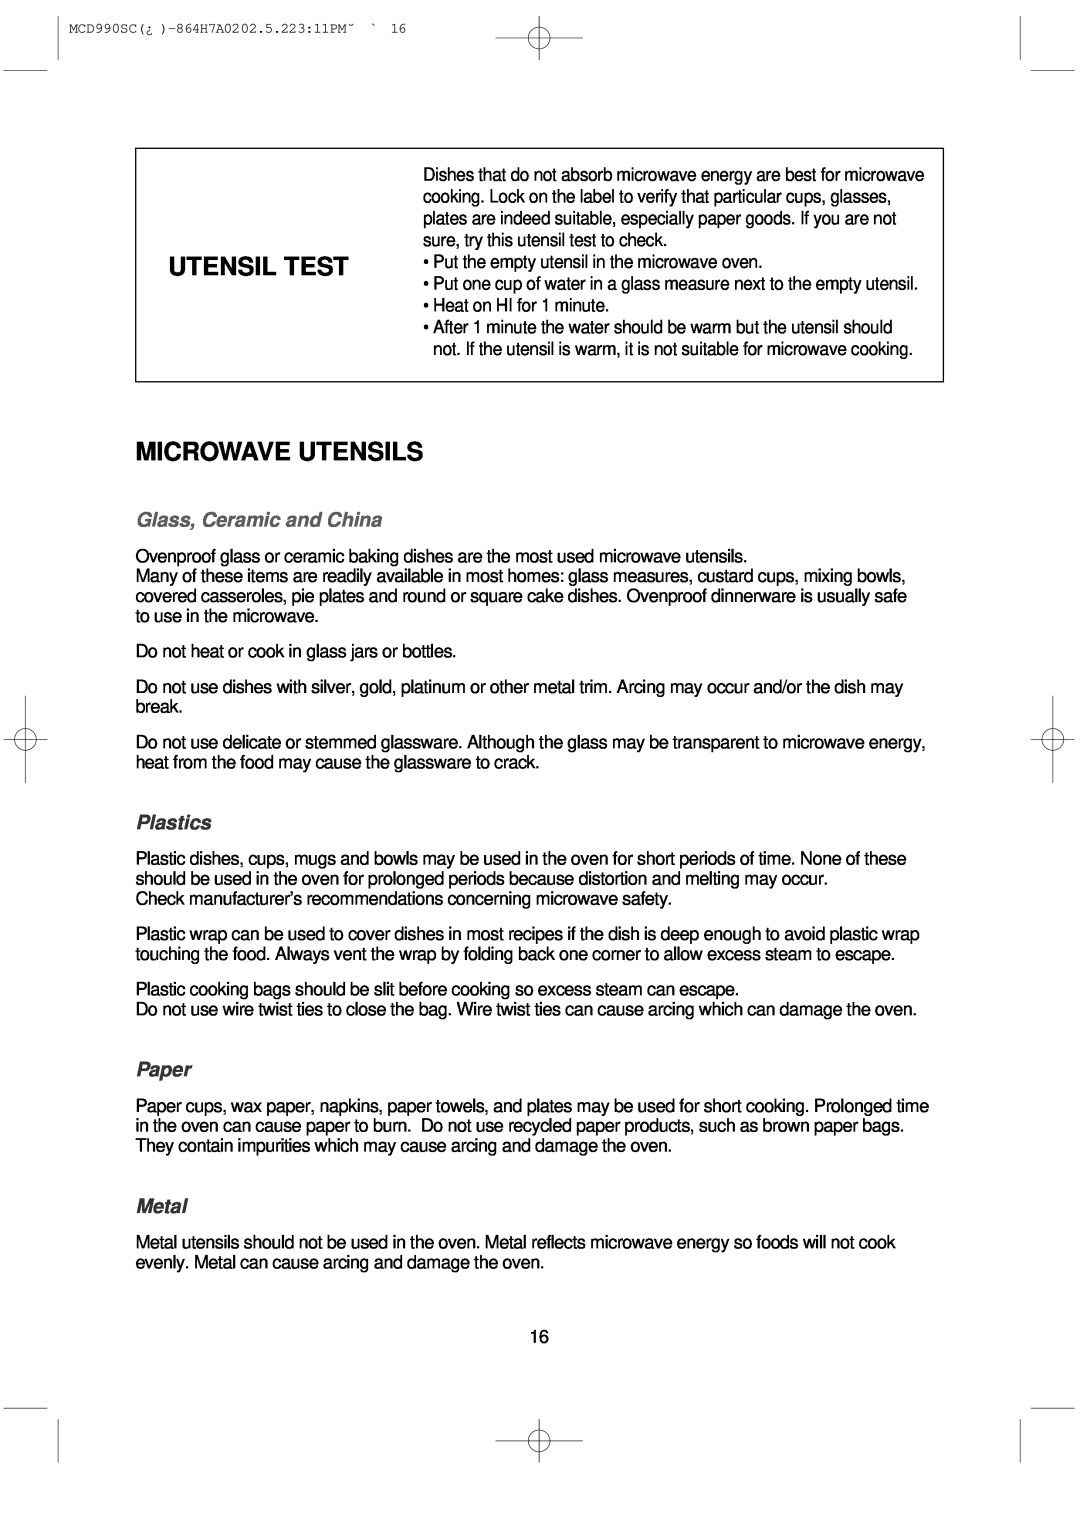 Magic Chef MCD990SC instruction manual Utensil Test, Microwave Utensils, Glass, Ceramic and China, Plastics, Paper, Metal 